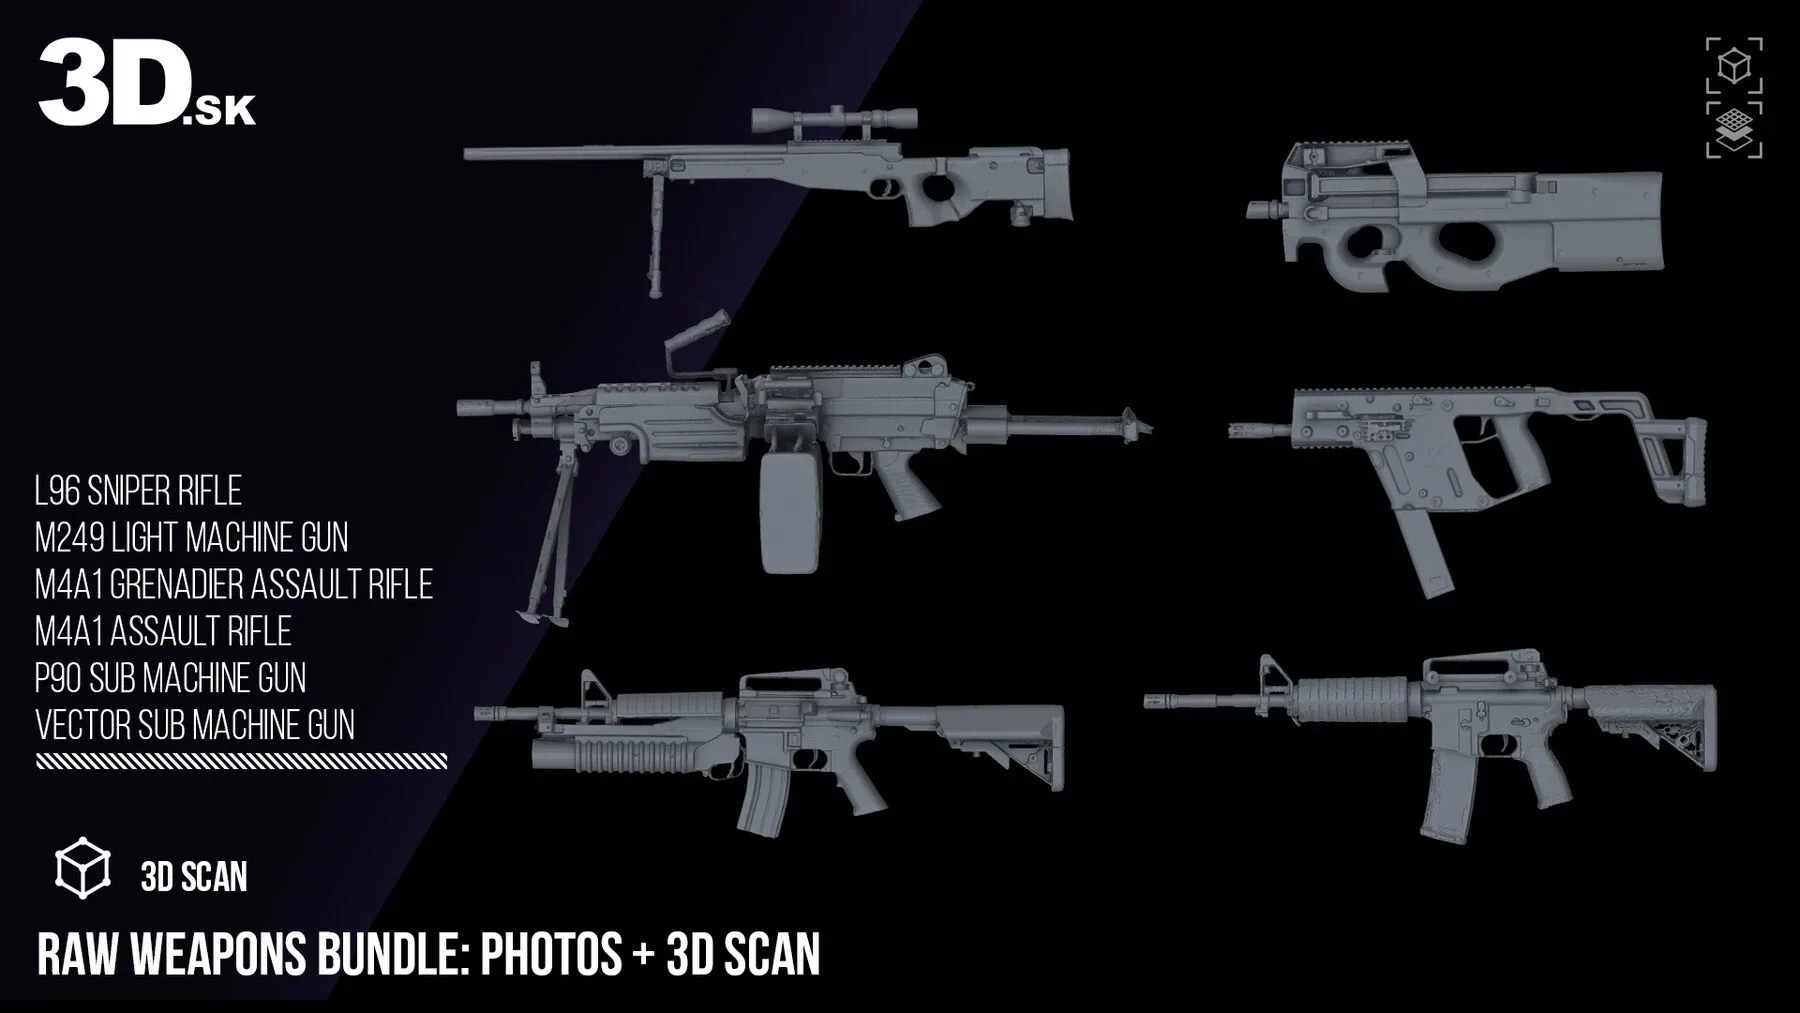 Raw Weapons Bundle: Photos + 3D Scan